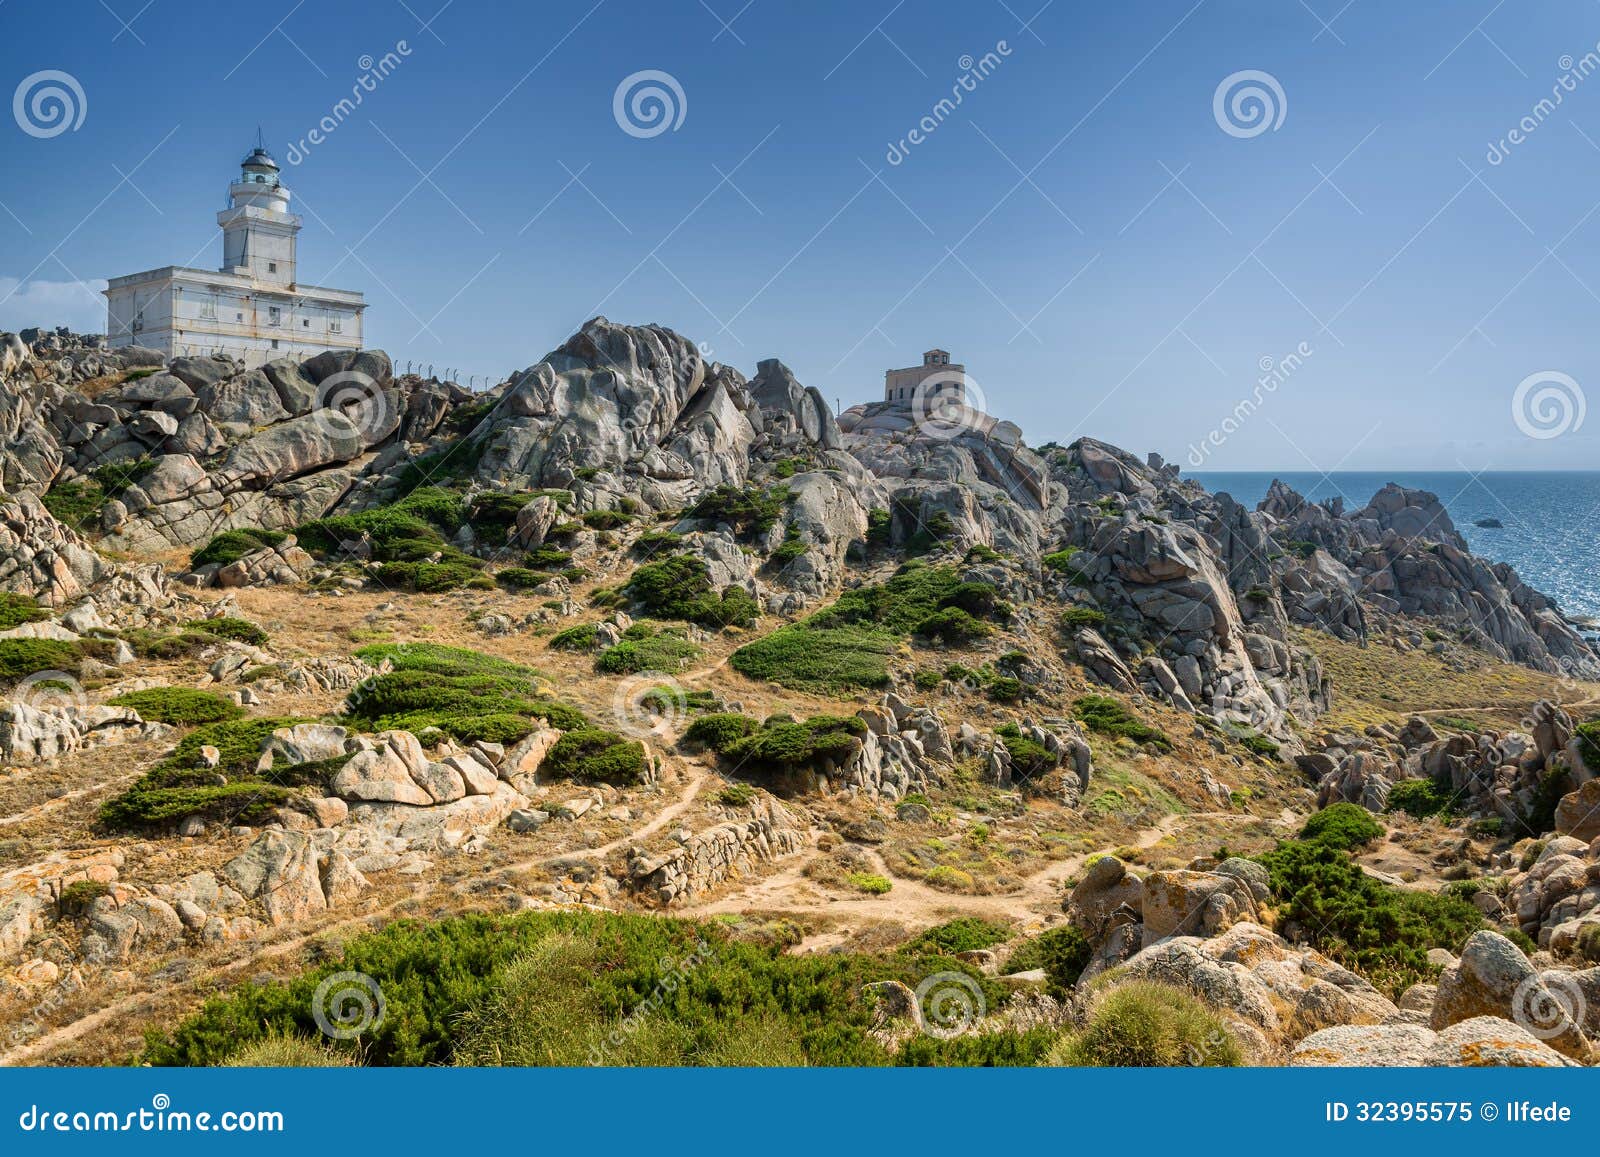 coastline and lighthouse in capo testa, sardinia, italy